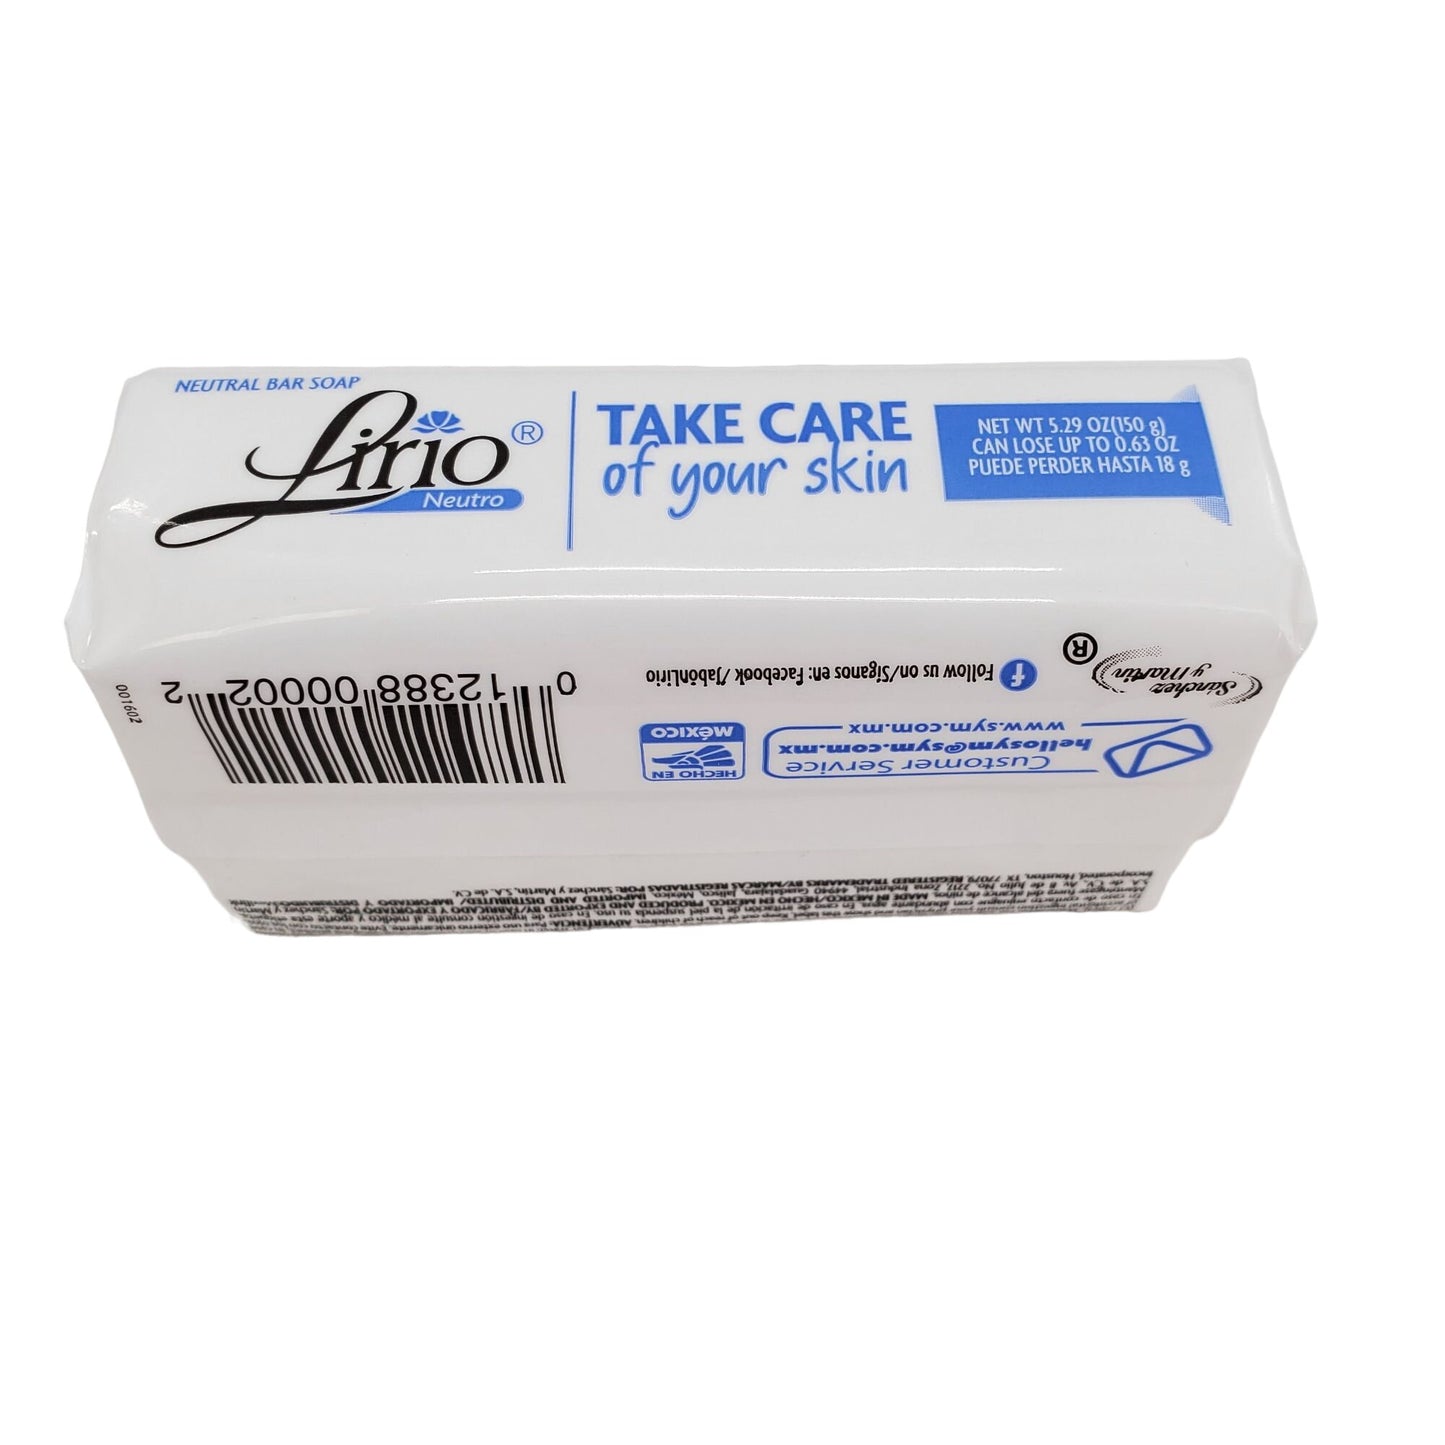 Lirio Neutro Neutral soap bar 5.29OZ (150g) Pack of 1 bath shower soap